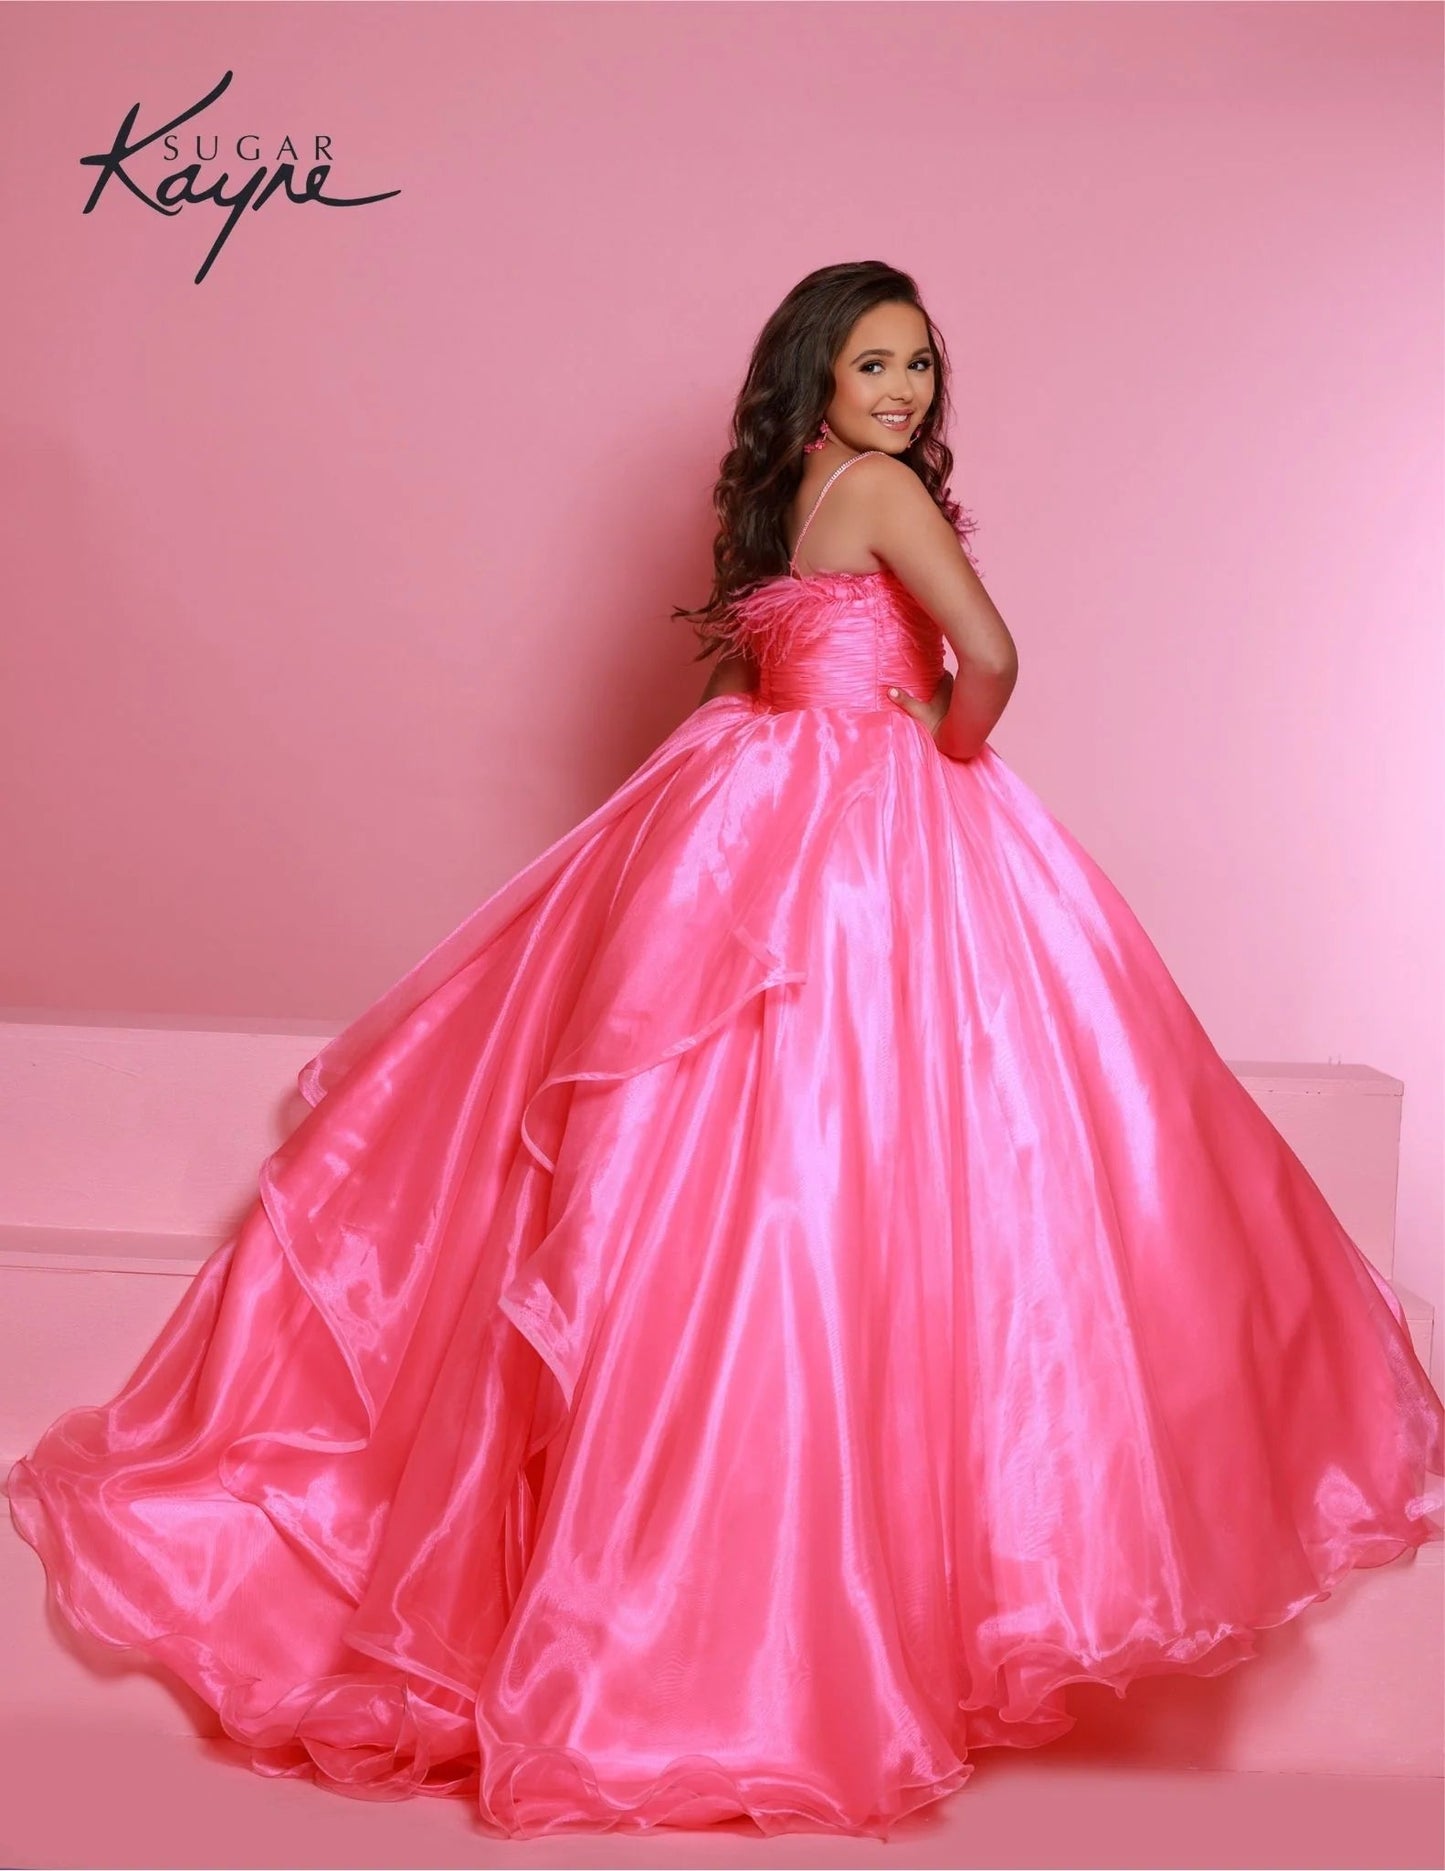 Sugar Kayne C330 Girls Preteens Pageant Dress size 6 Barbie